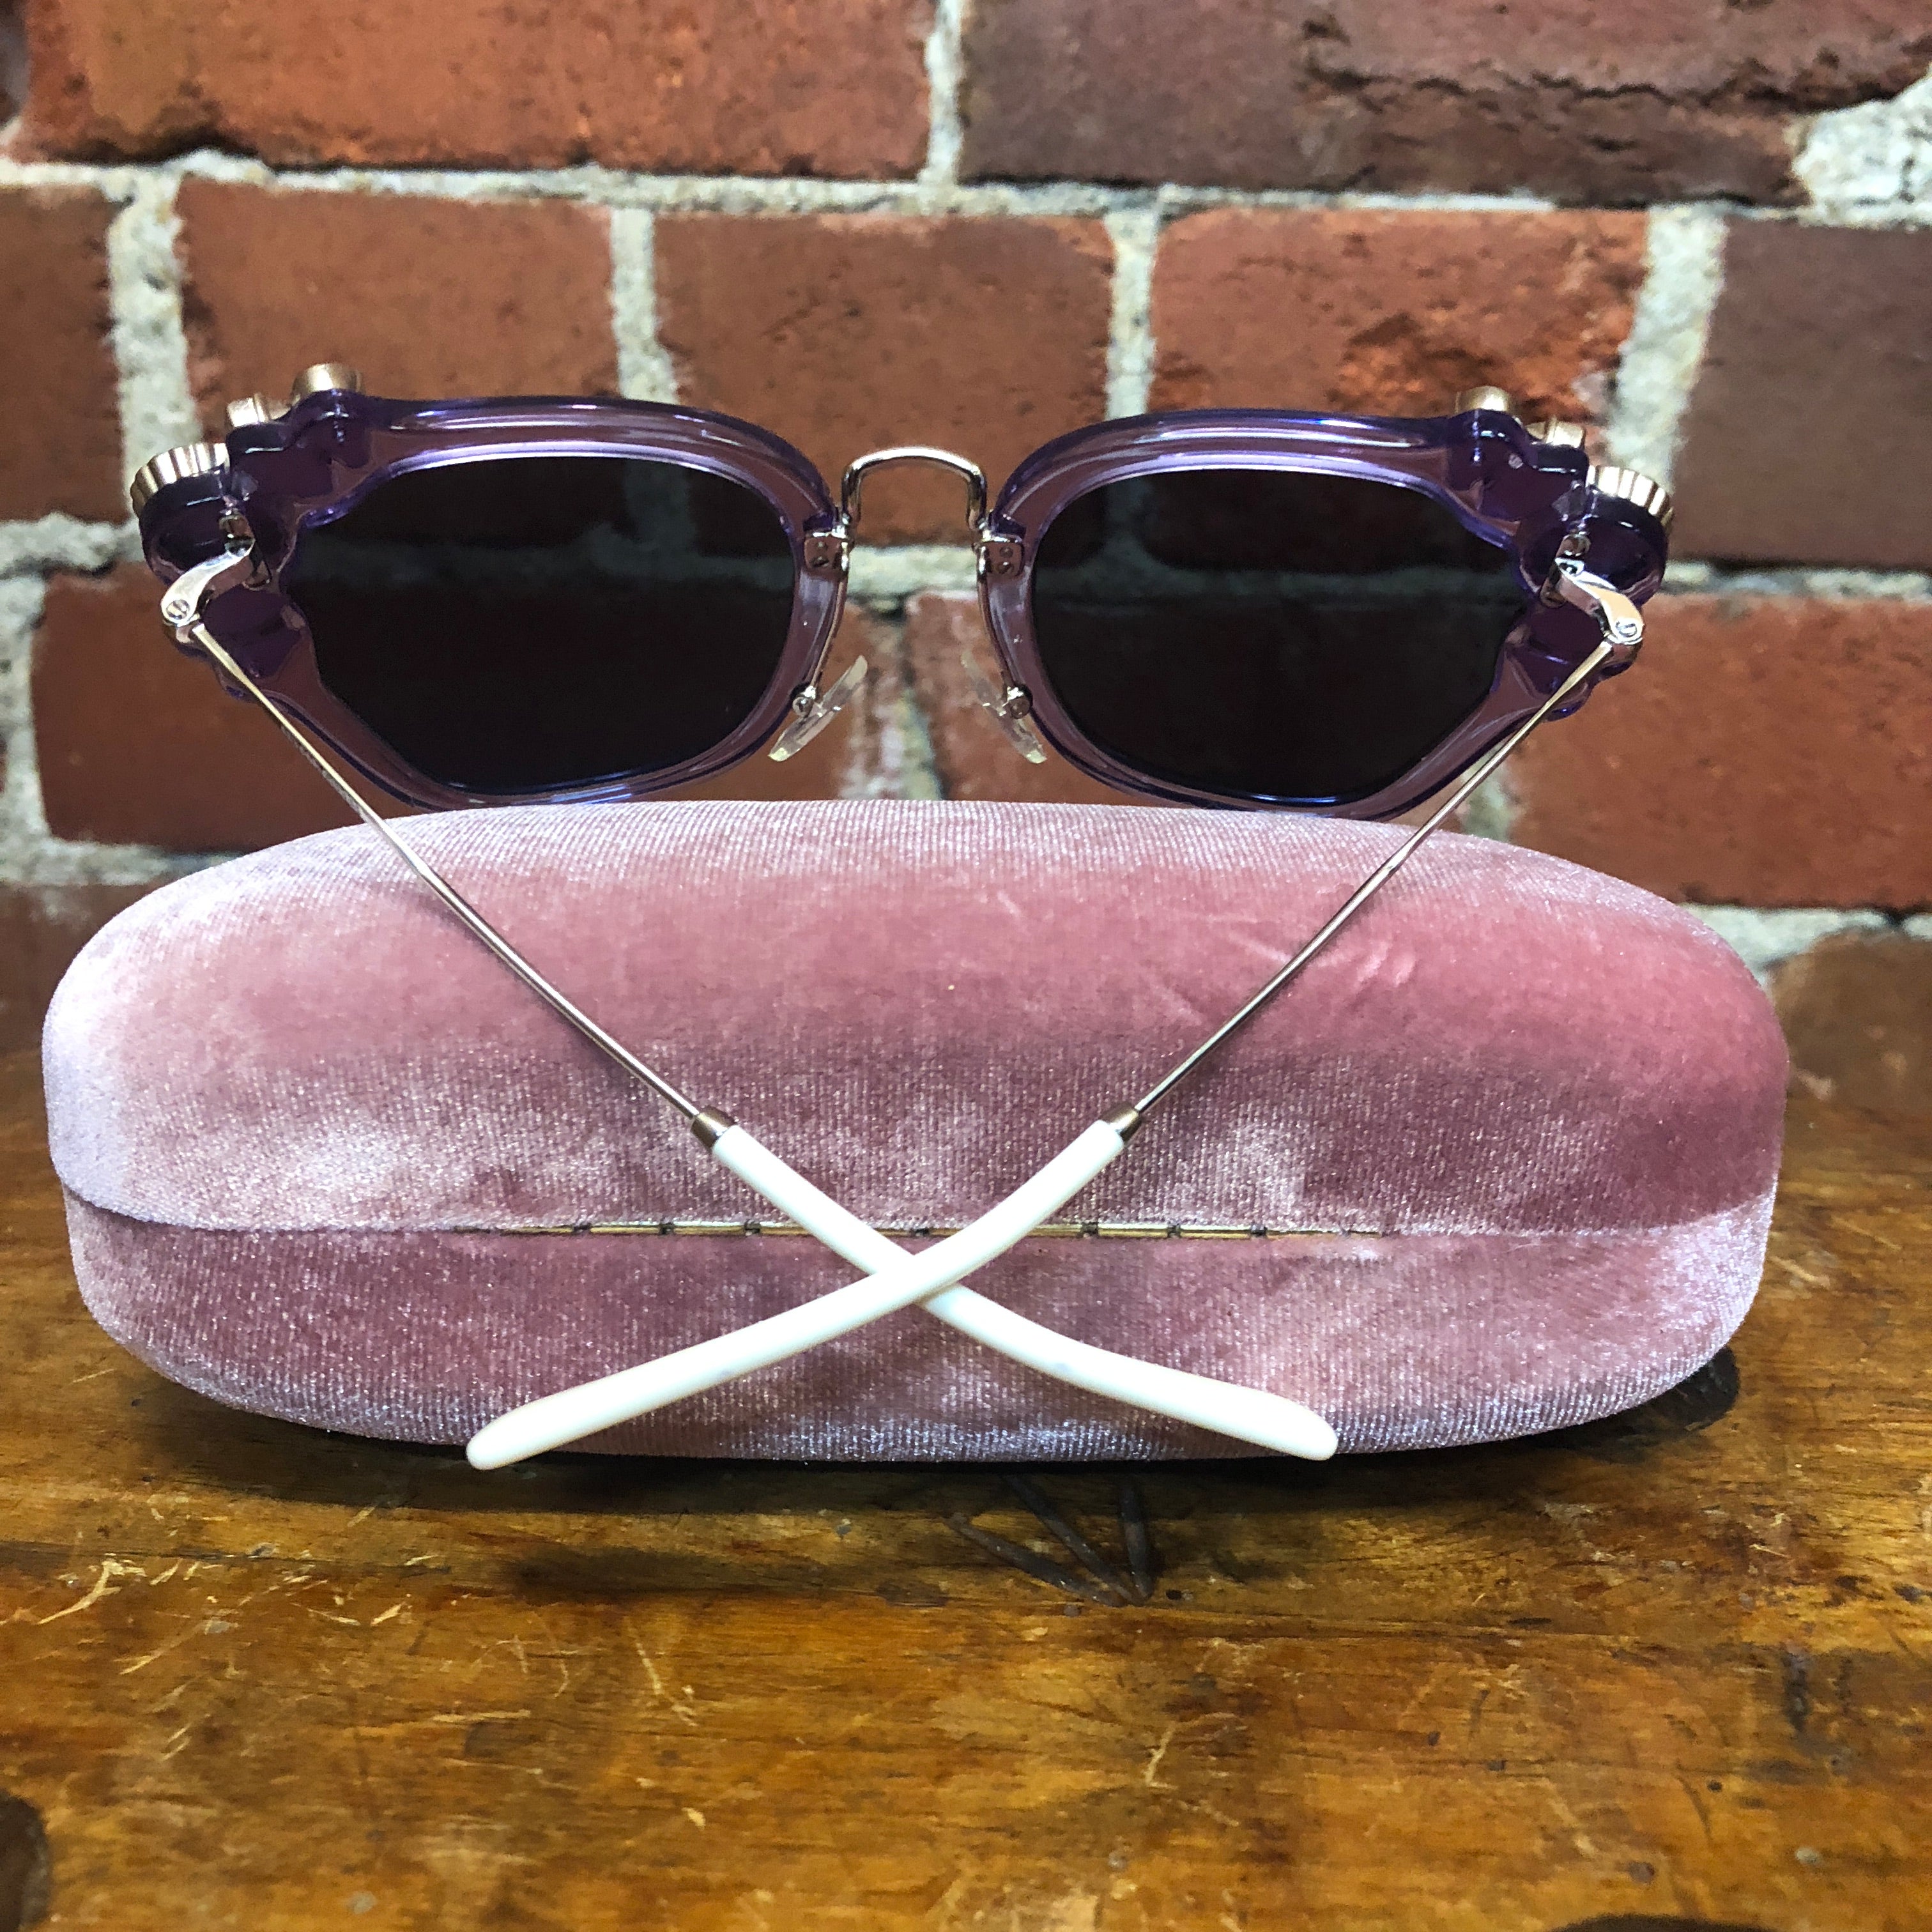 MIU MIU jewelled frame sunglasses